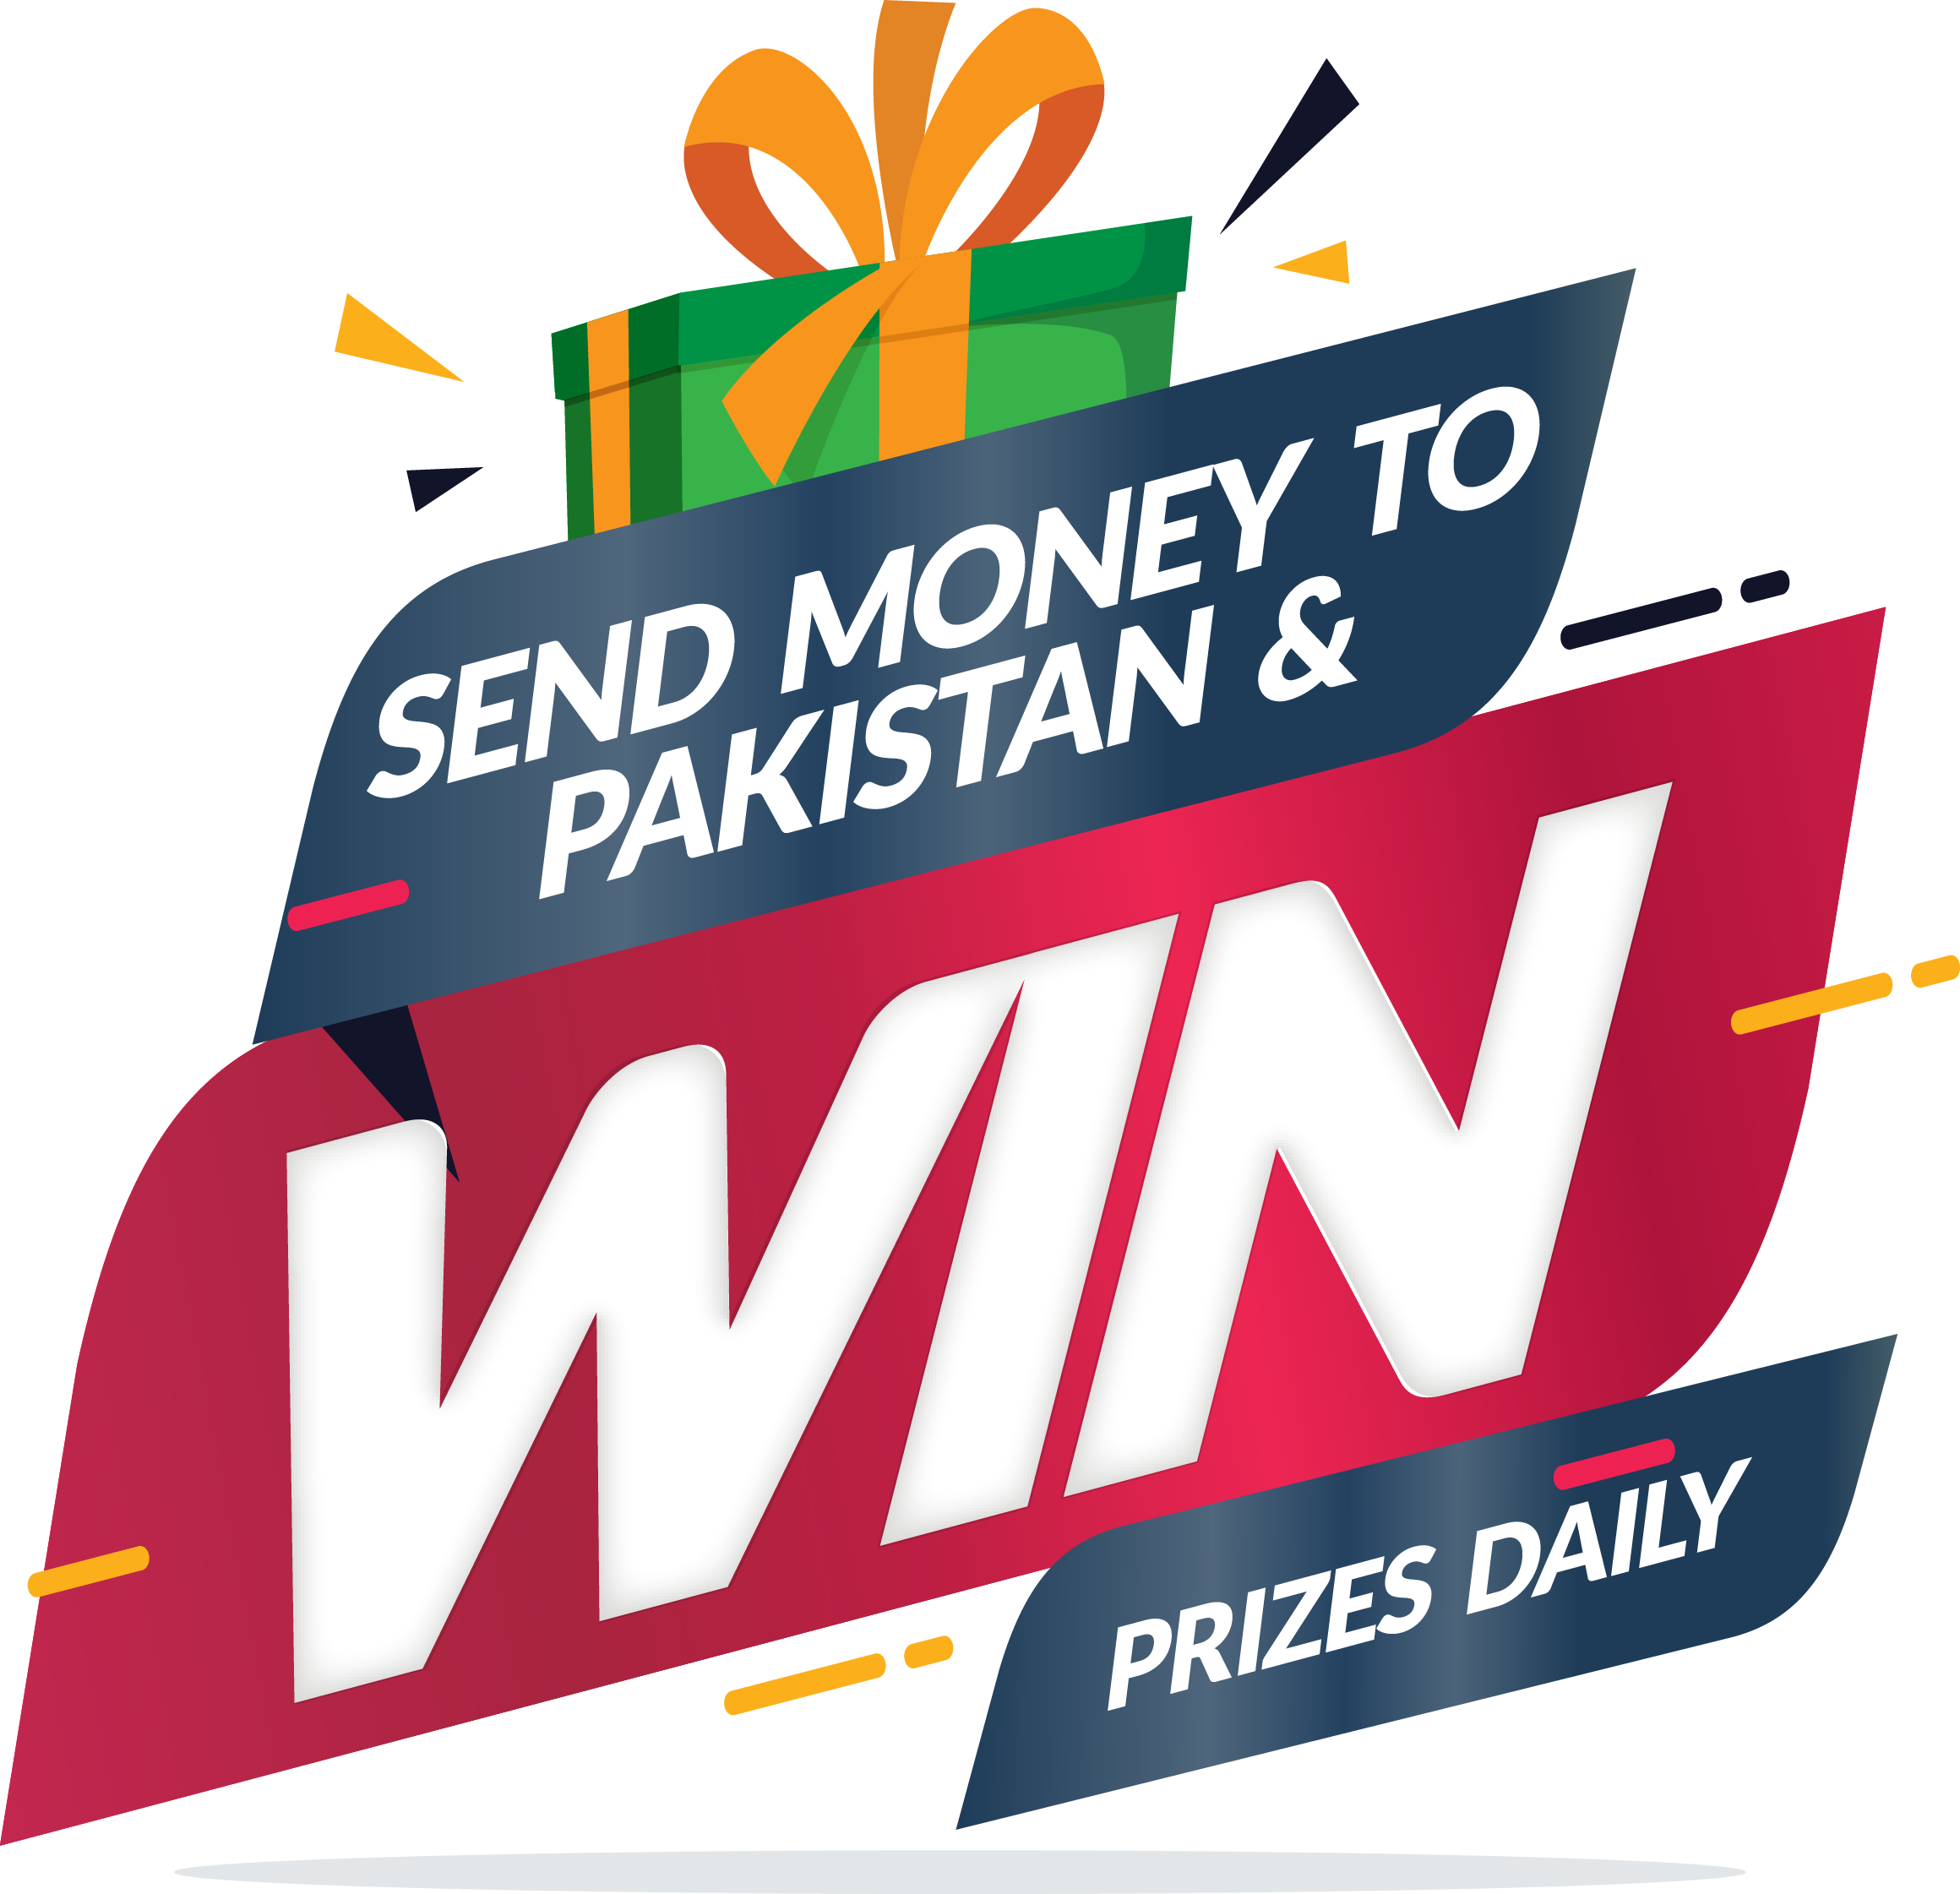 Send money to Pakistan & Win daily prizes!